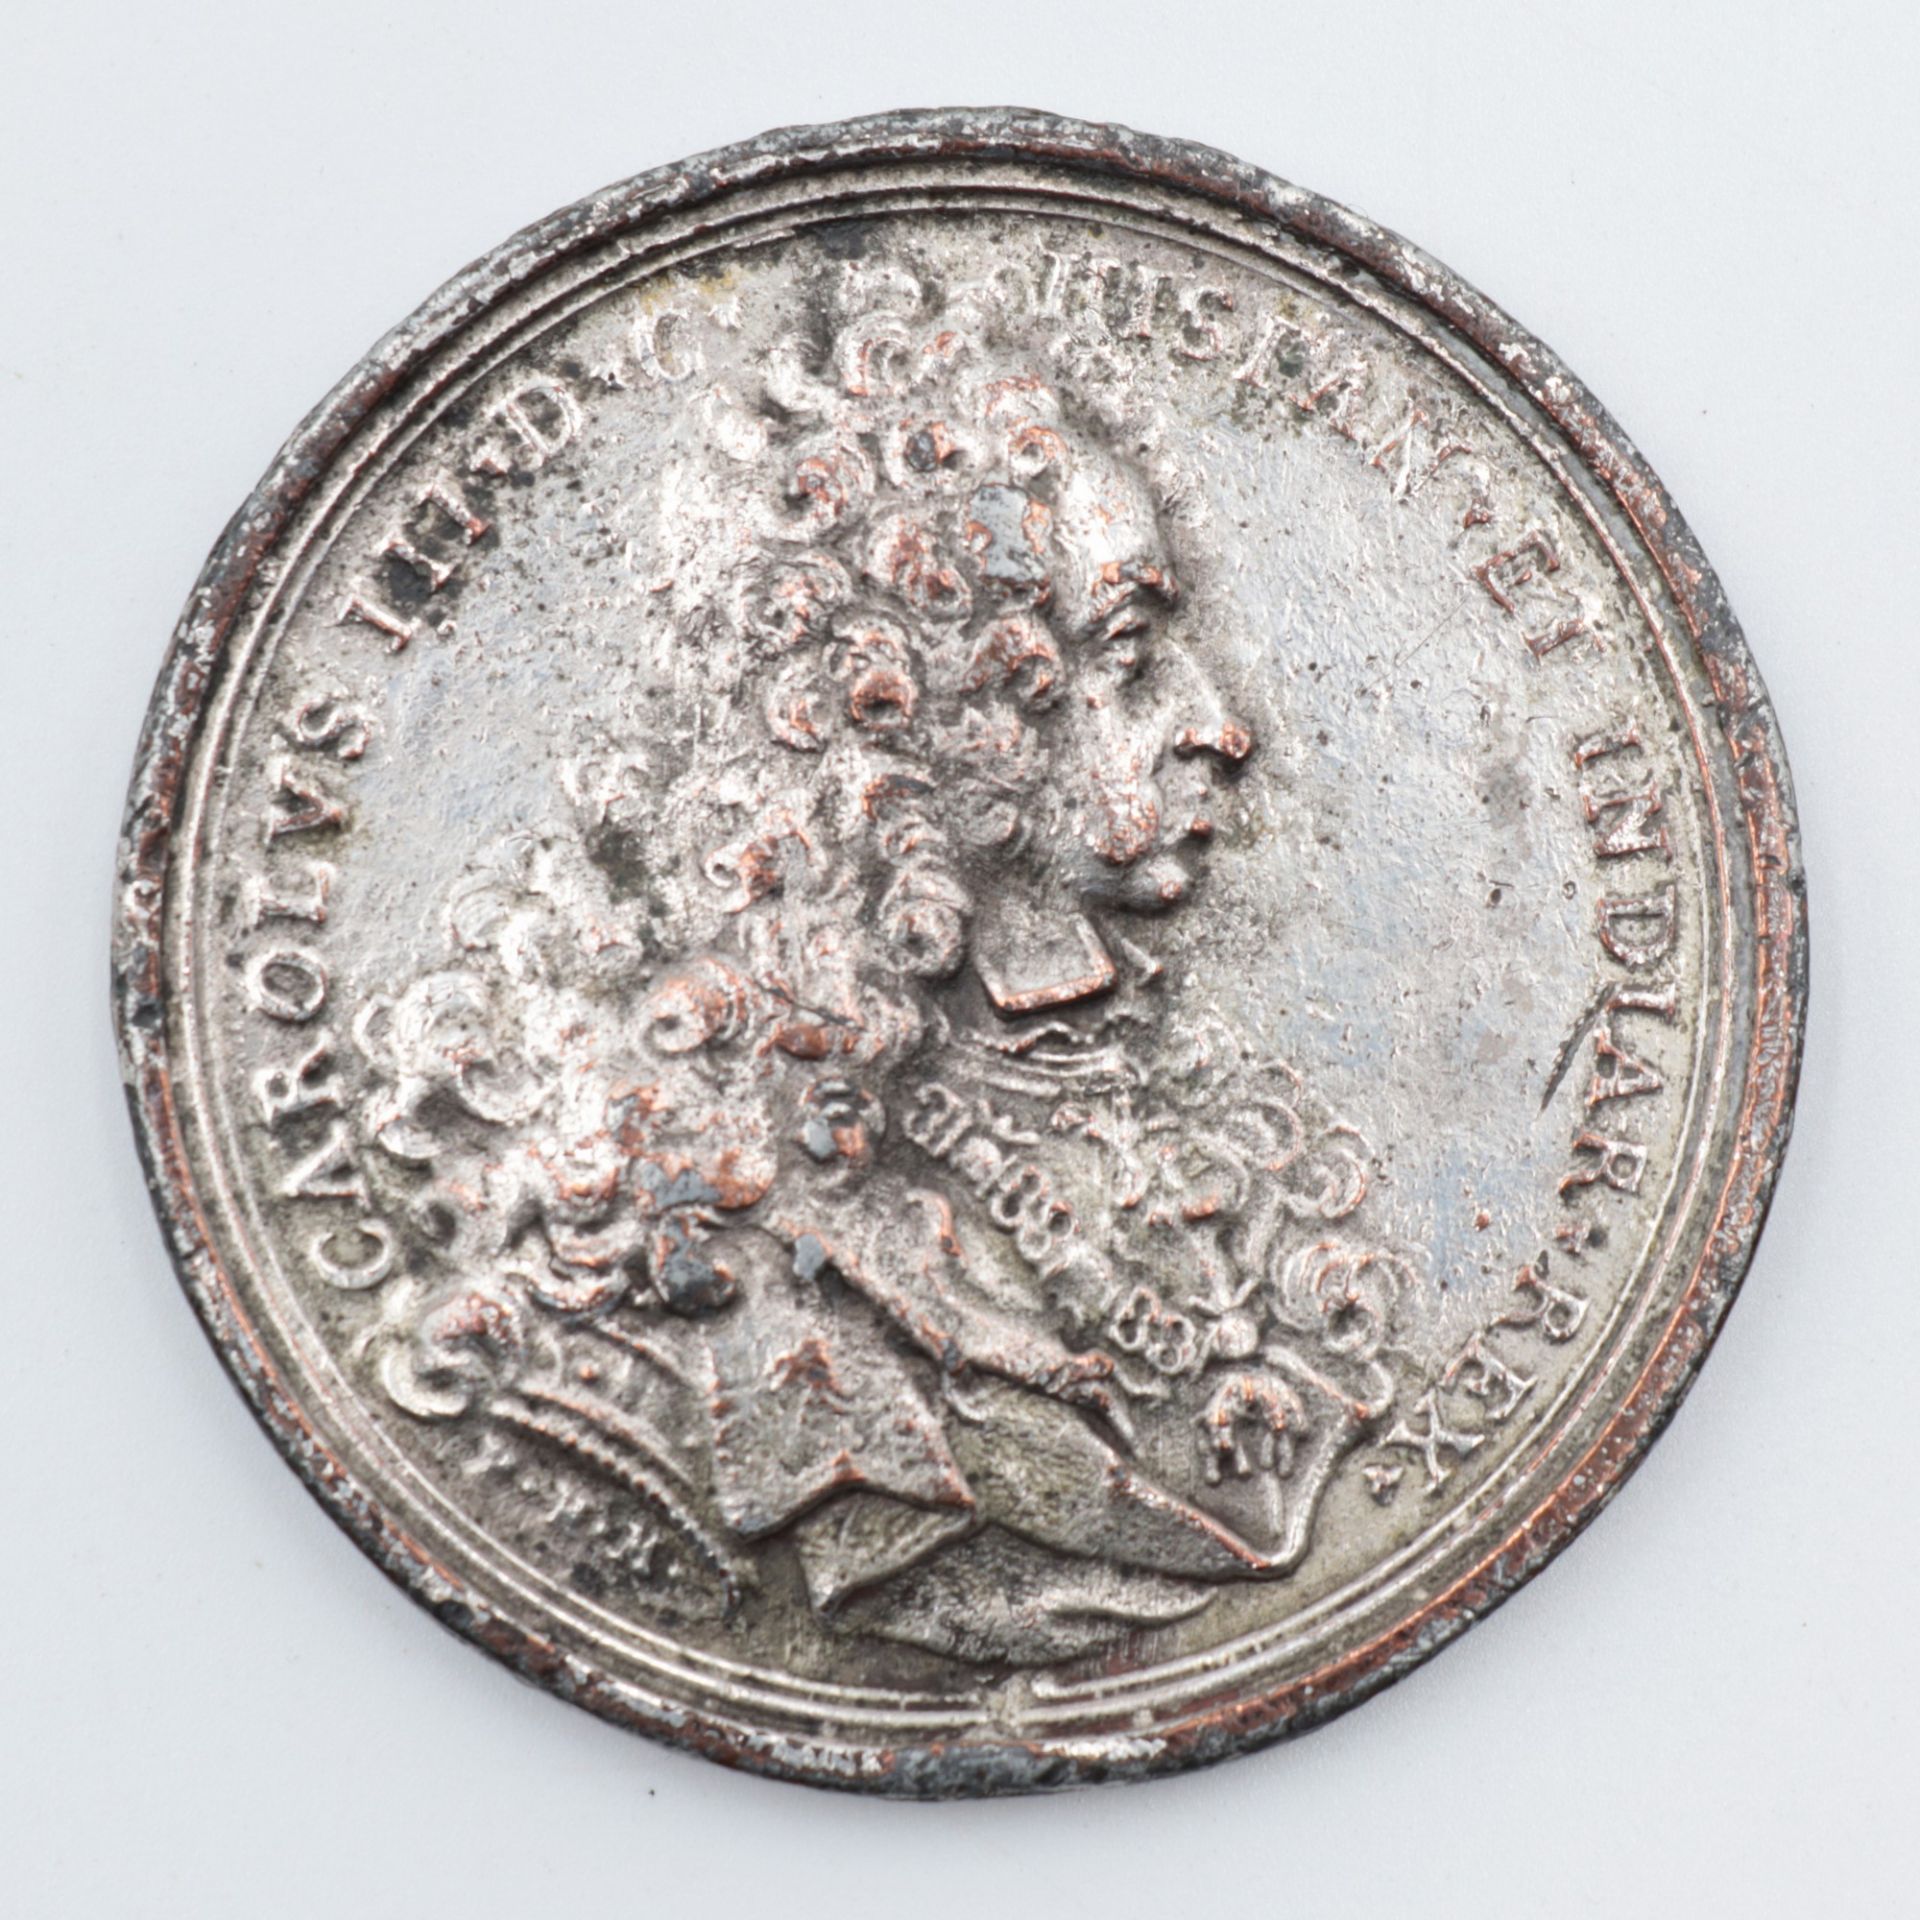 Medaille Spanien, Kupfer, versilbert, Avers: Kopfbild Karl III. v. Spanien u. Indien, Schriftzug: "